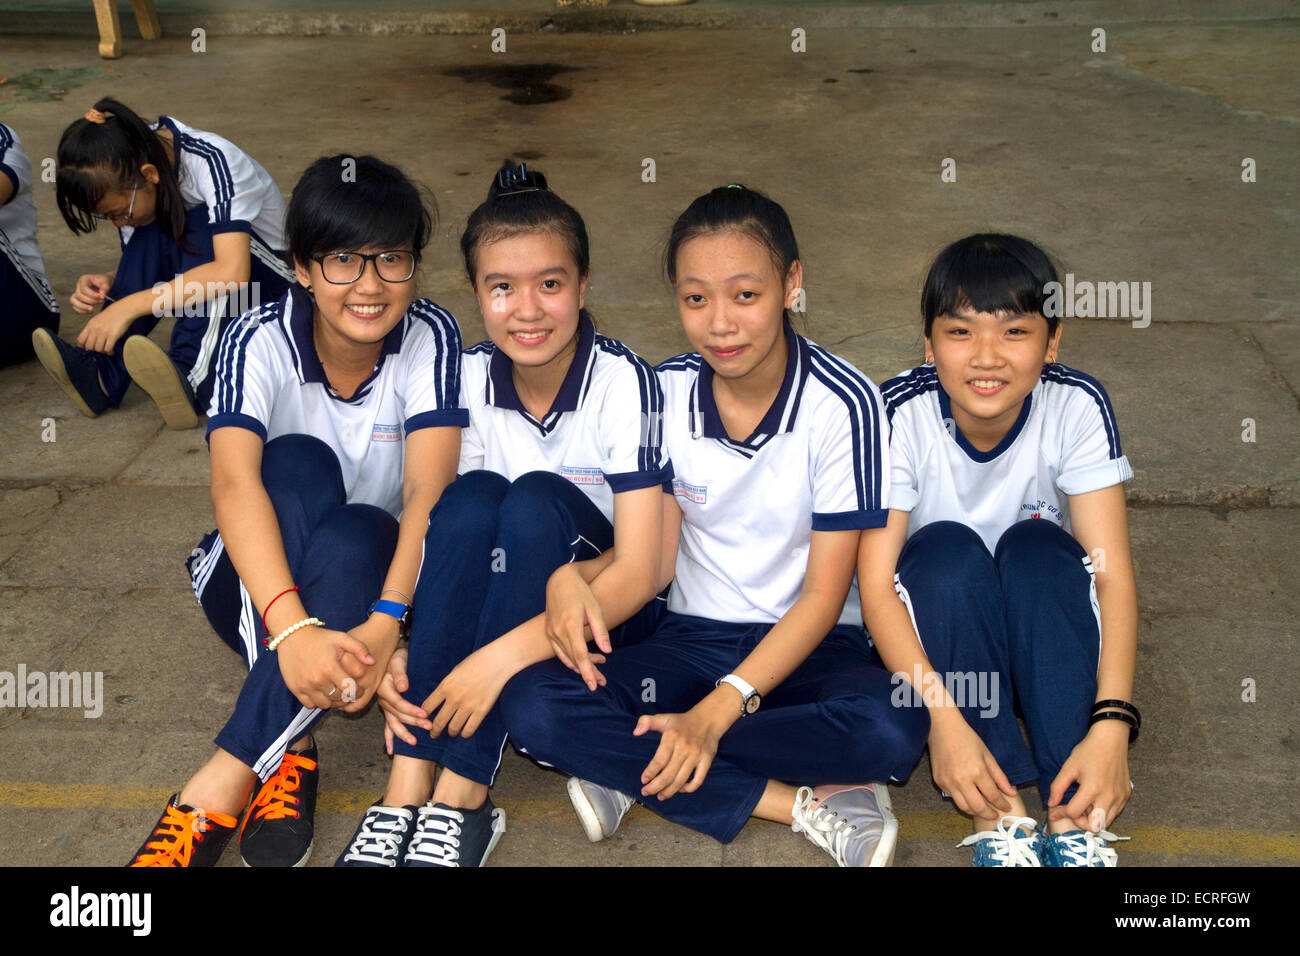 Vietnamese elementary school students wearing uniforms in Nha Trang, Vietnam. Stock Photo